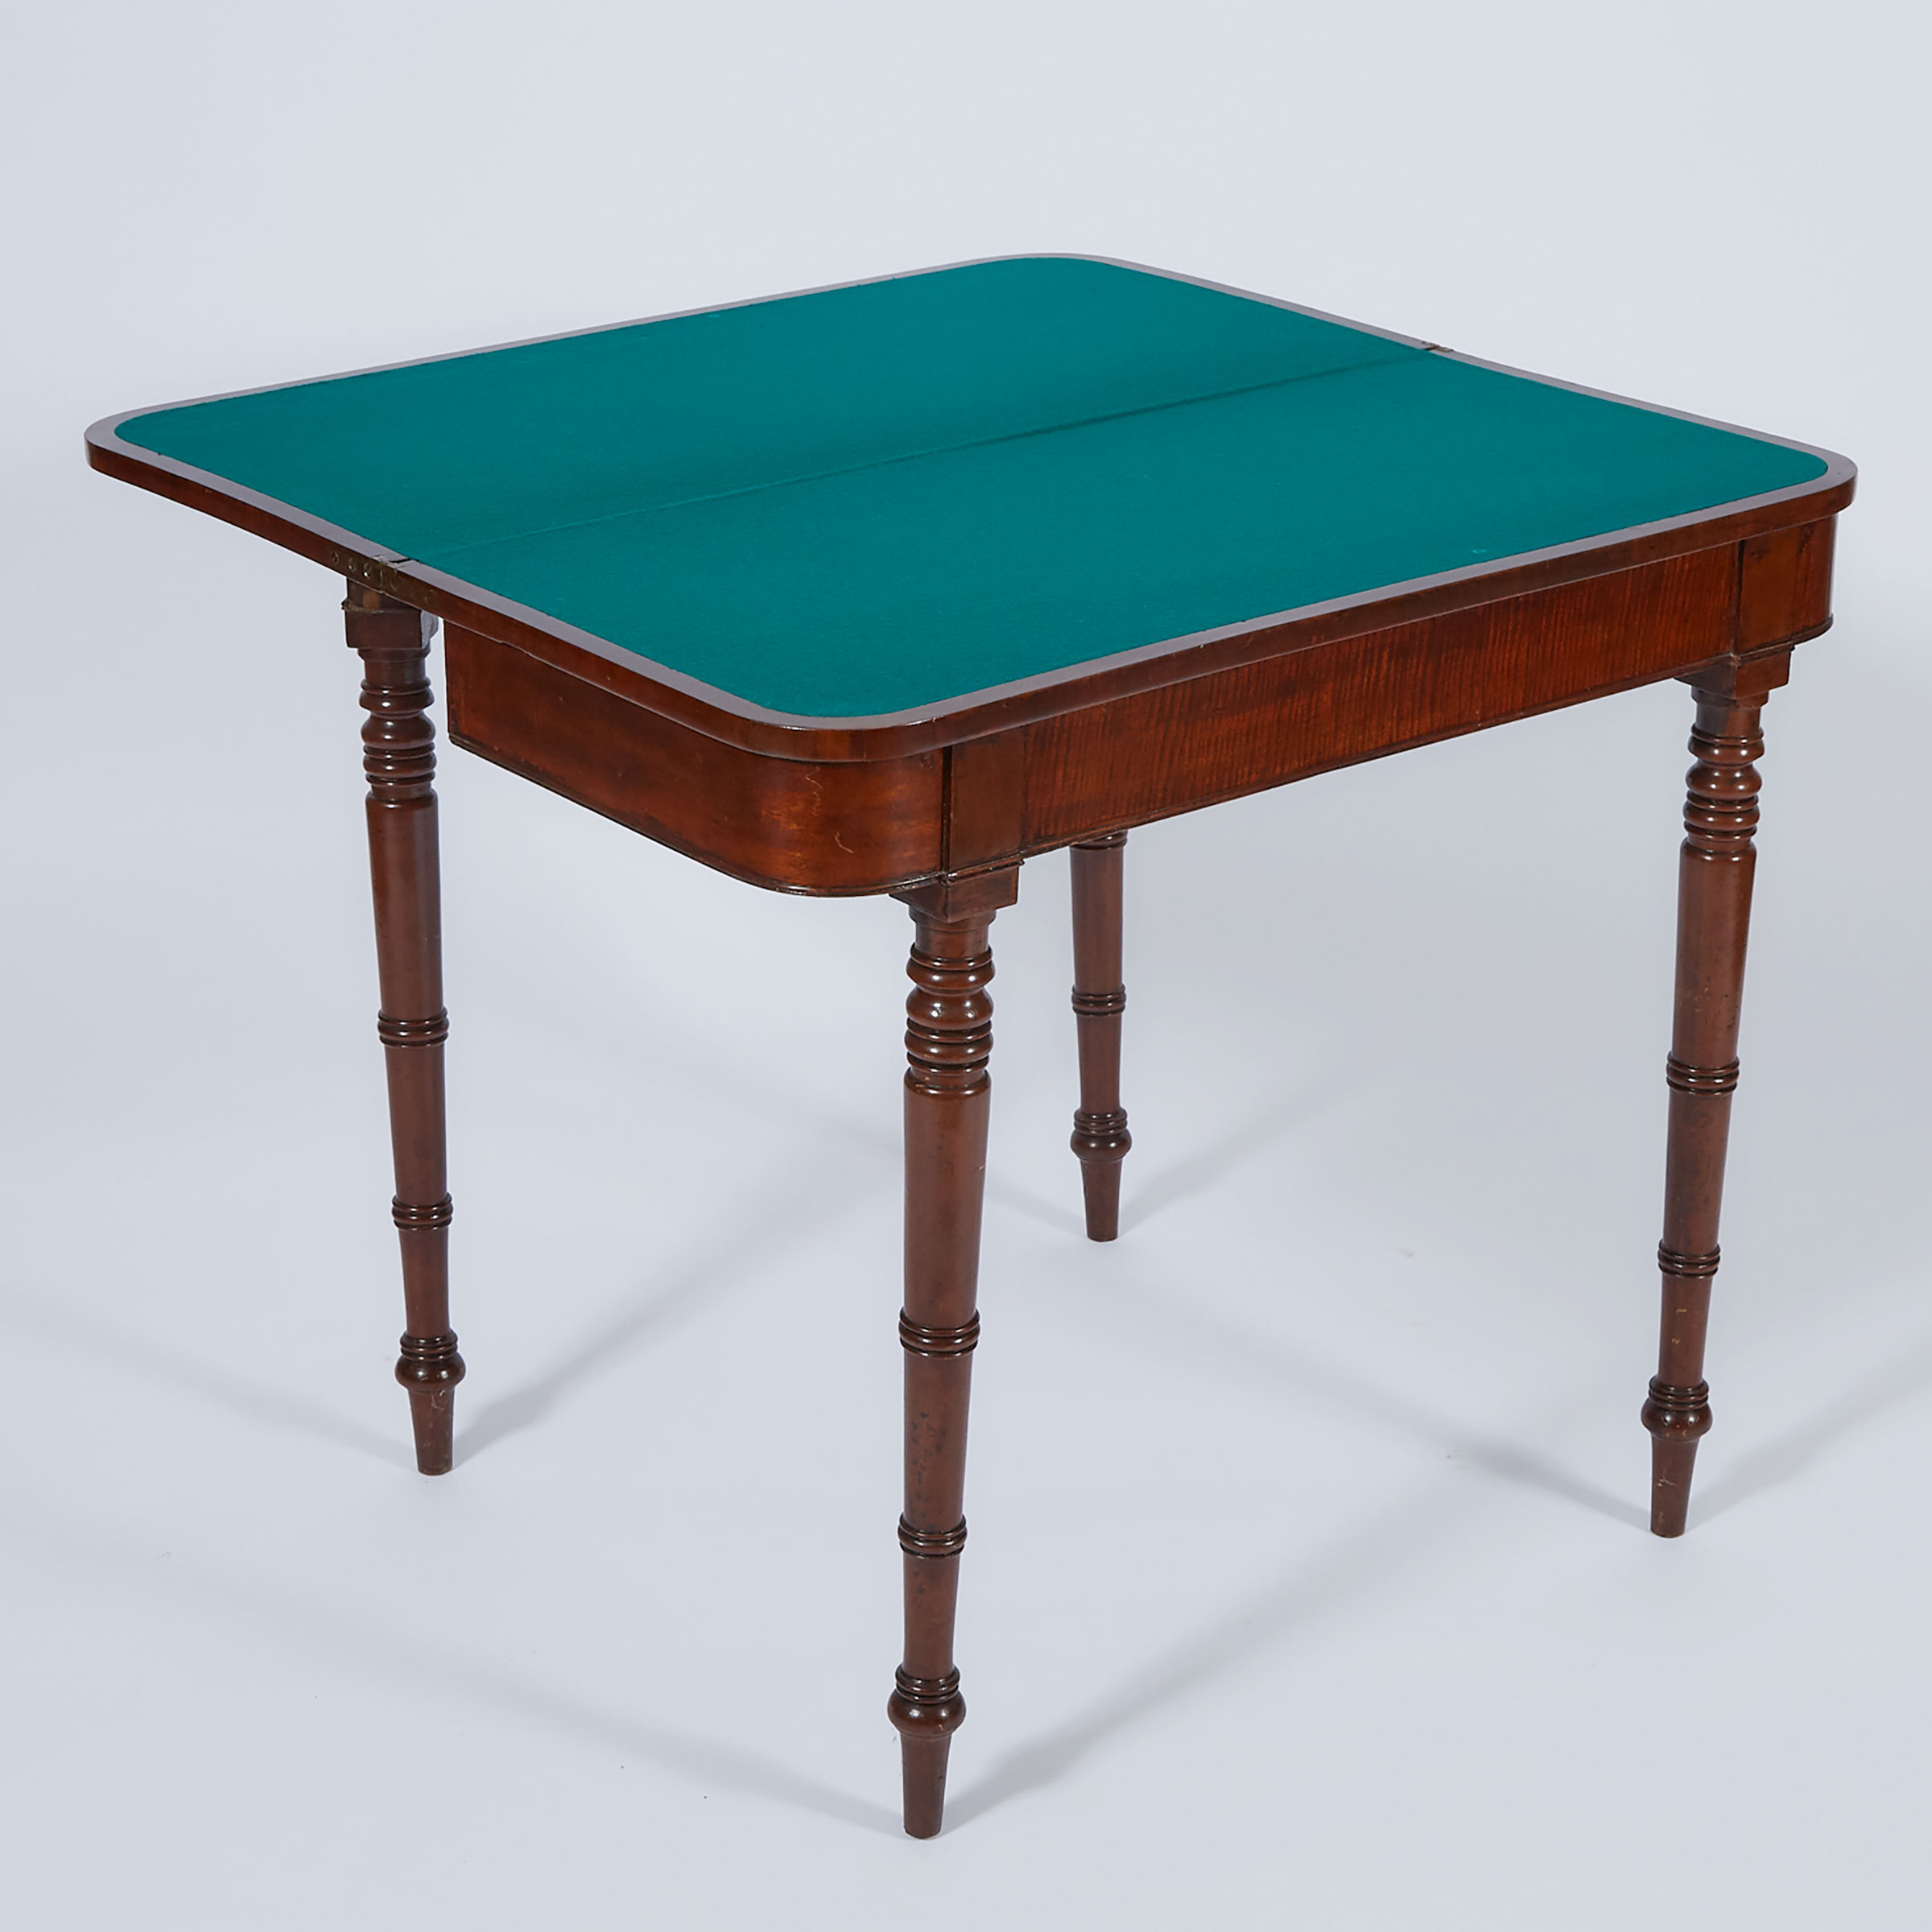 Regency Figured Mahogany Games Table, early 19th century